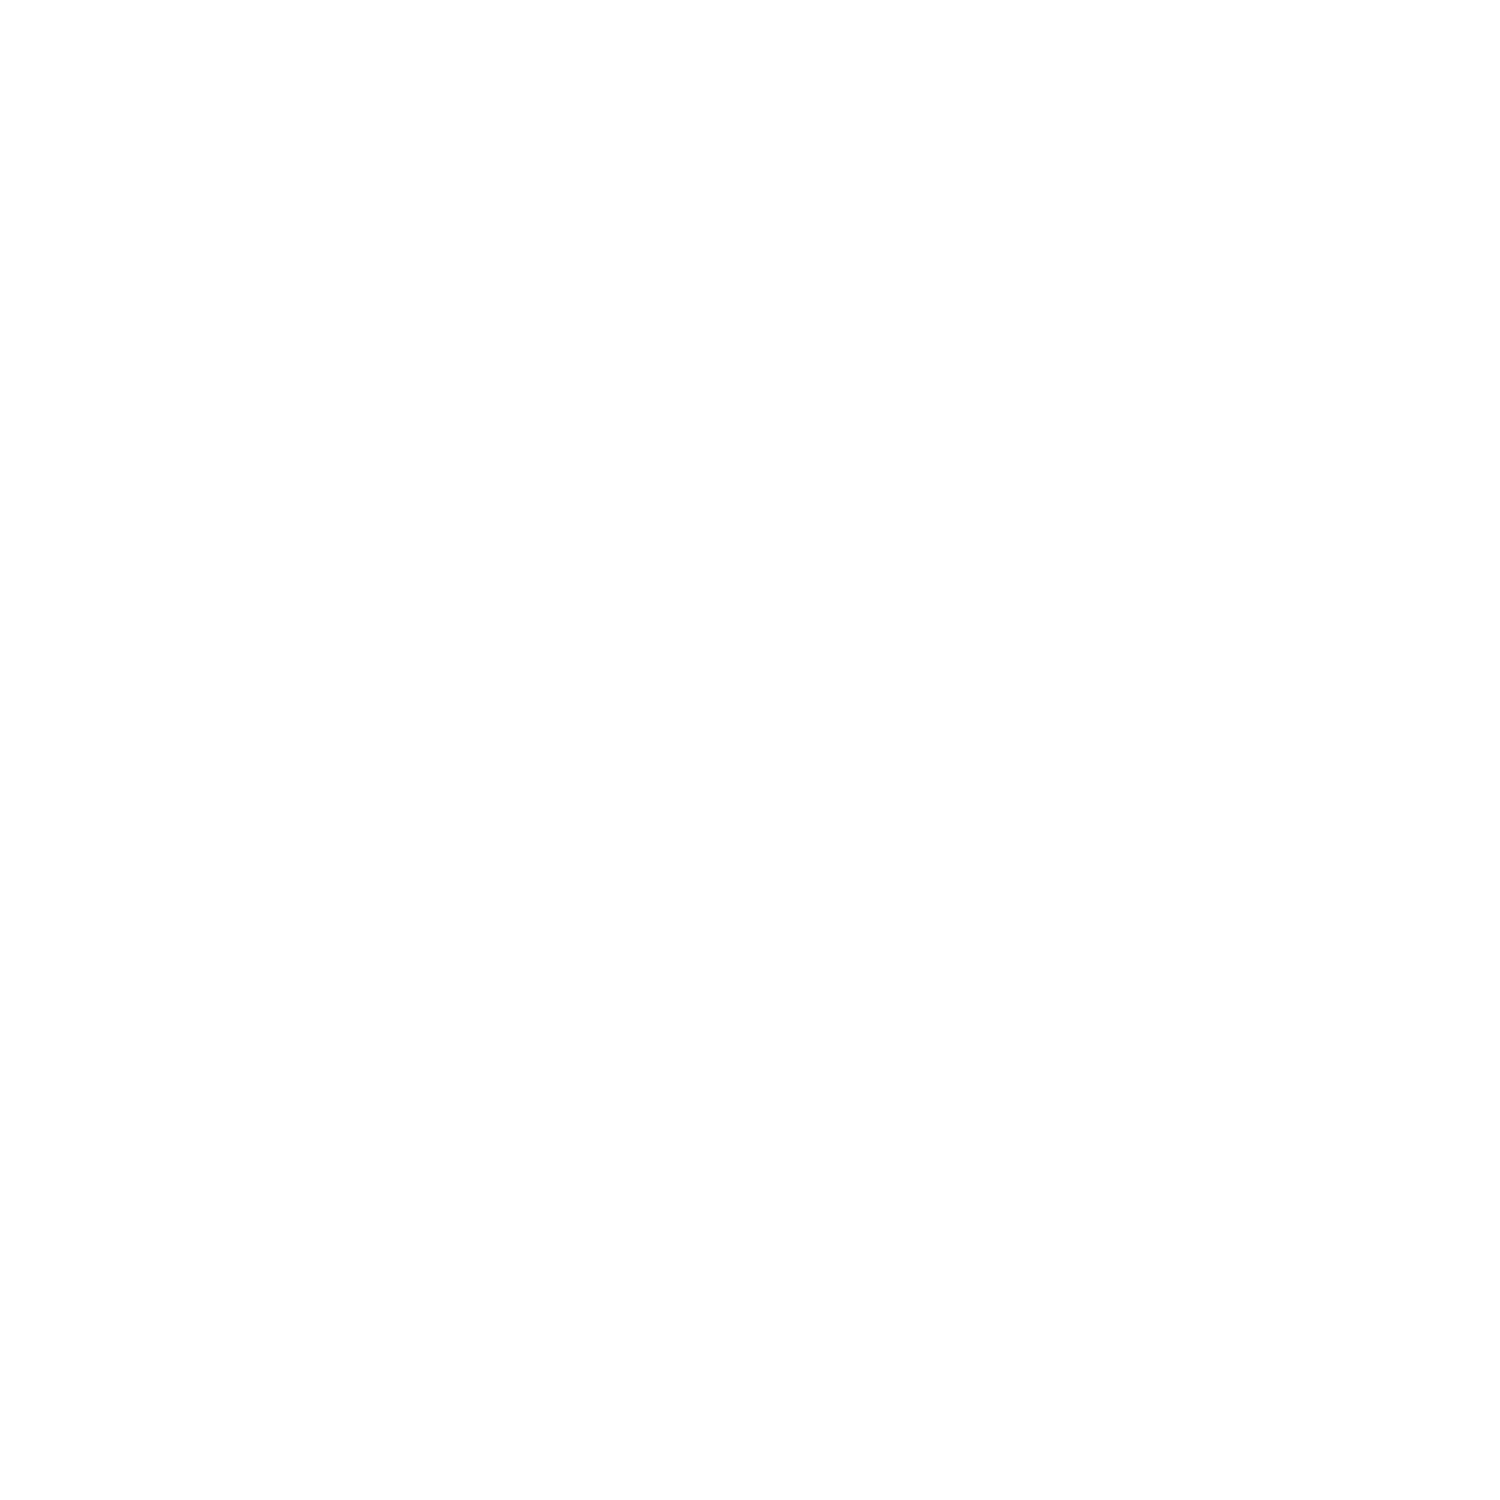 Optimist International logo